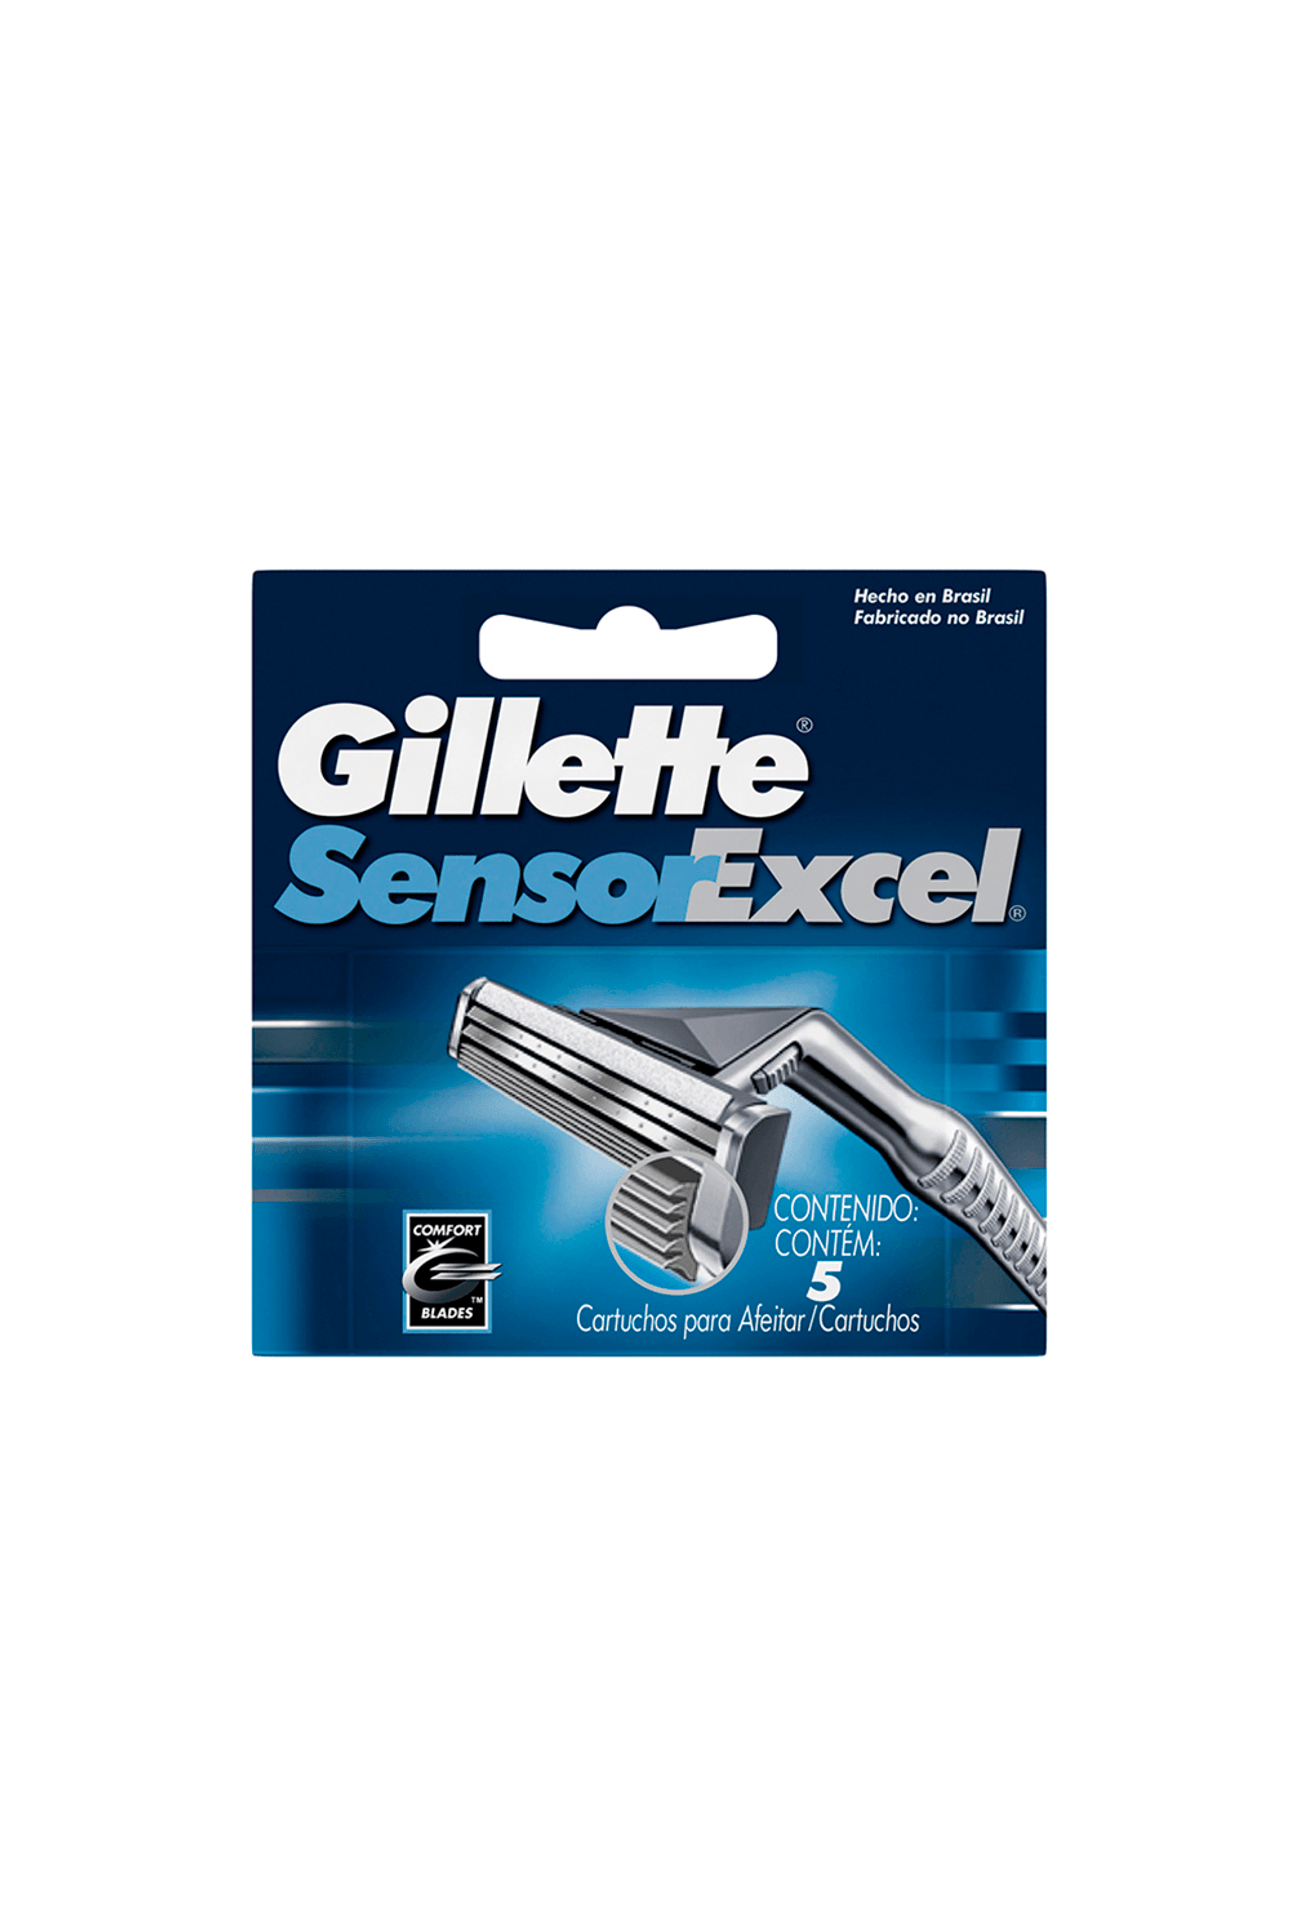 203868_Gillette-Sensor-Excel-Cartucho-x-5-Unid_img1